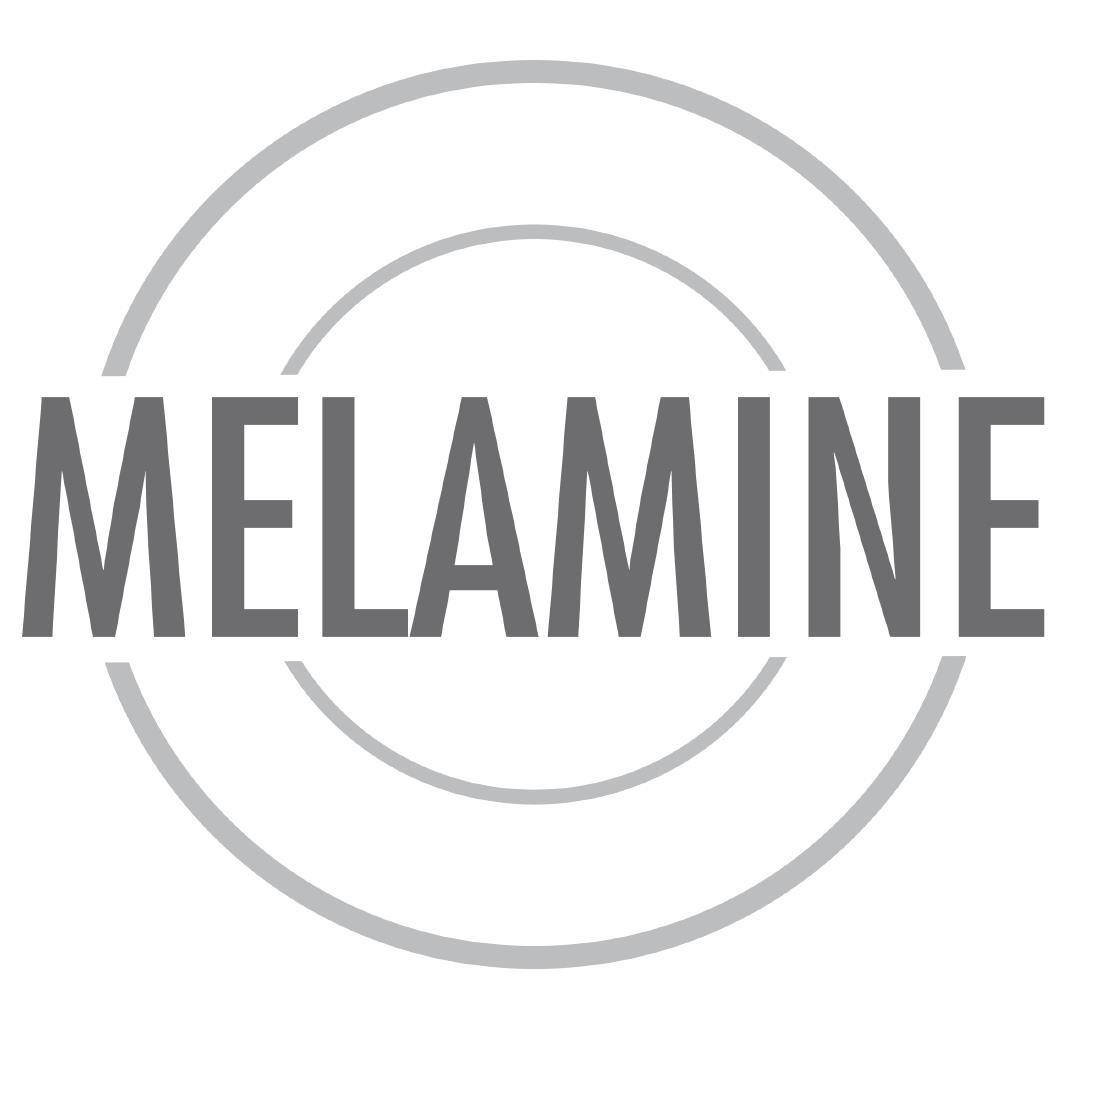 Melamine Burgundy Rectangular Placemat - F628  - 2